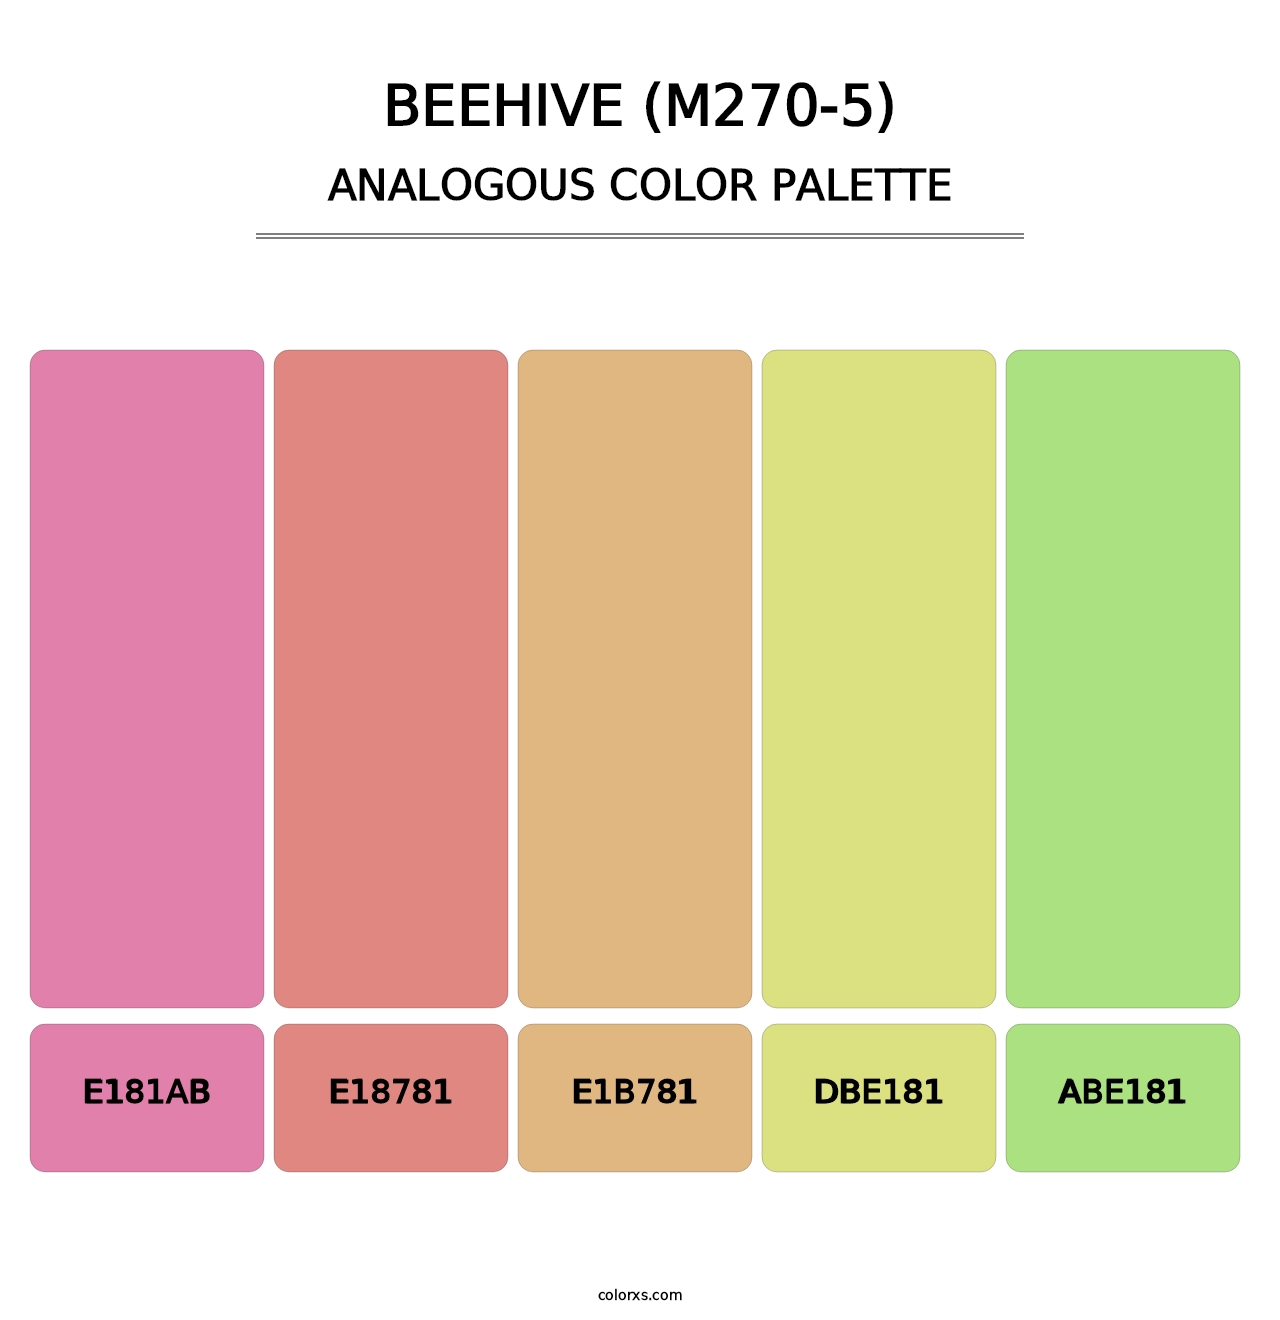 Beehive (M270-5) - Analogous Color Palette